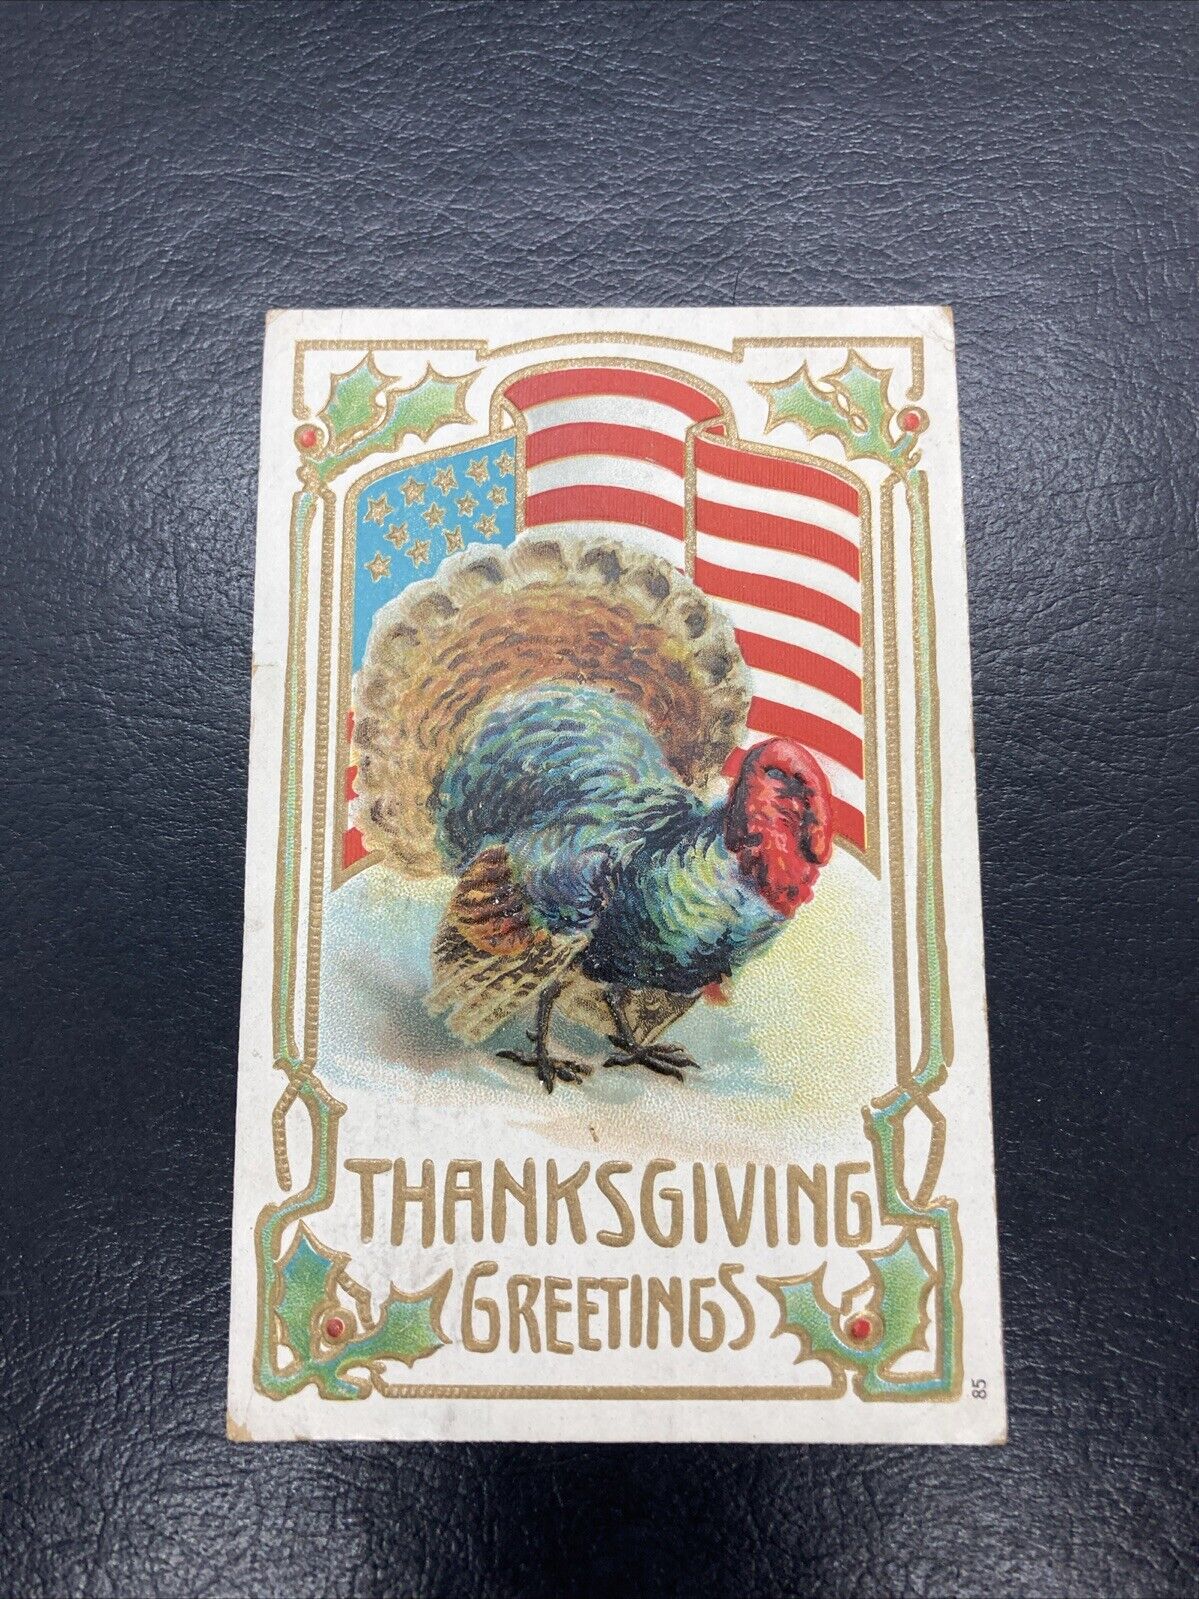 1908 Thanksgiving Greetings Turkey Holly Berries Embossed Antique Postcard